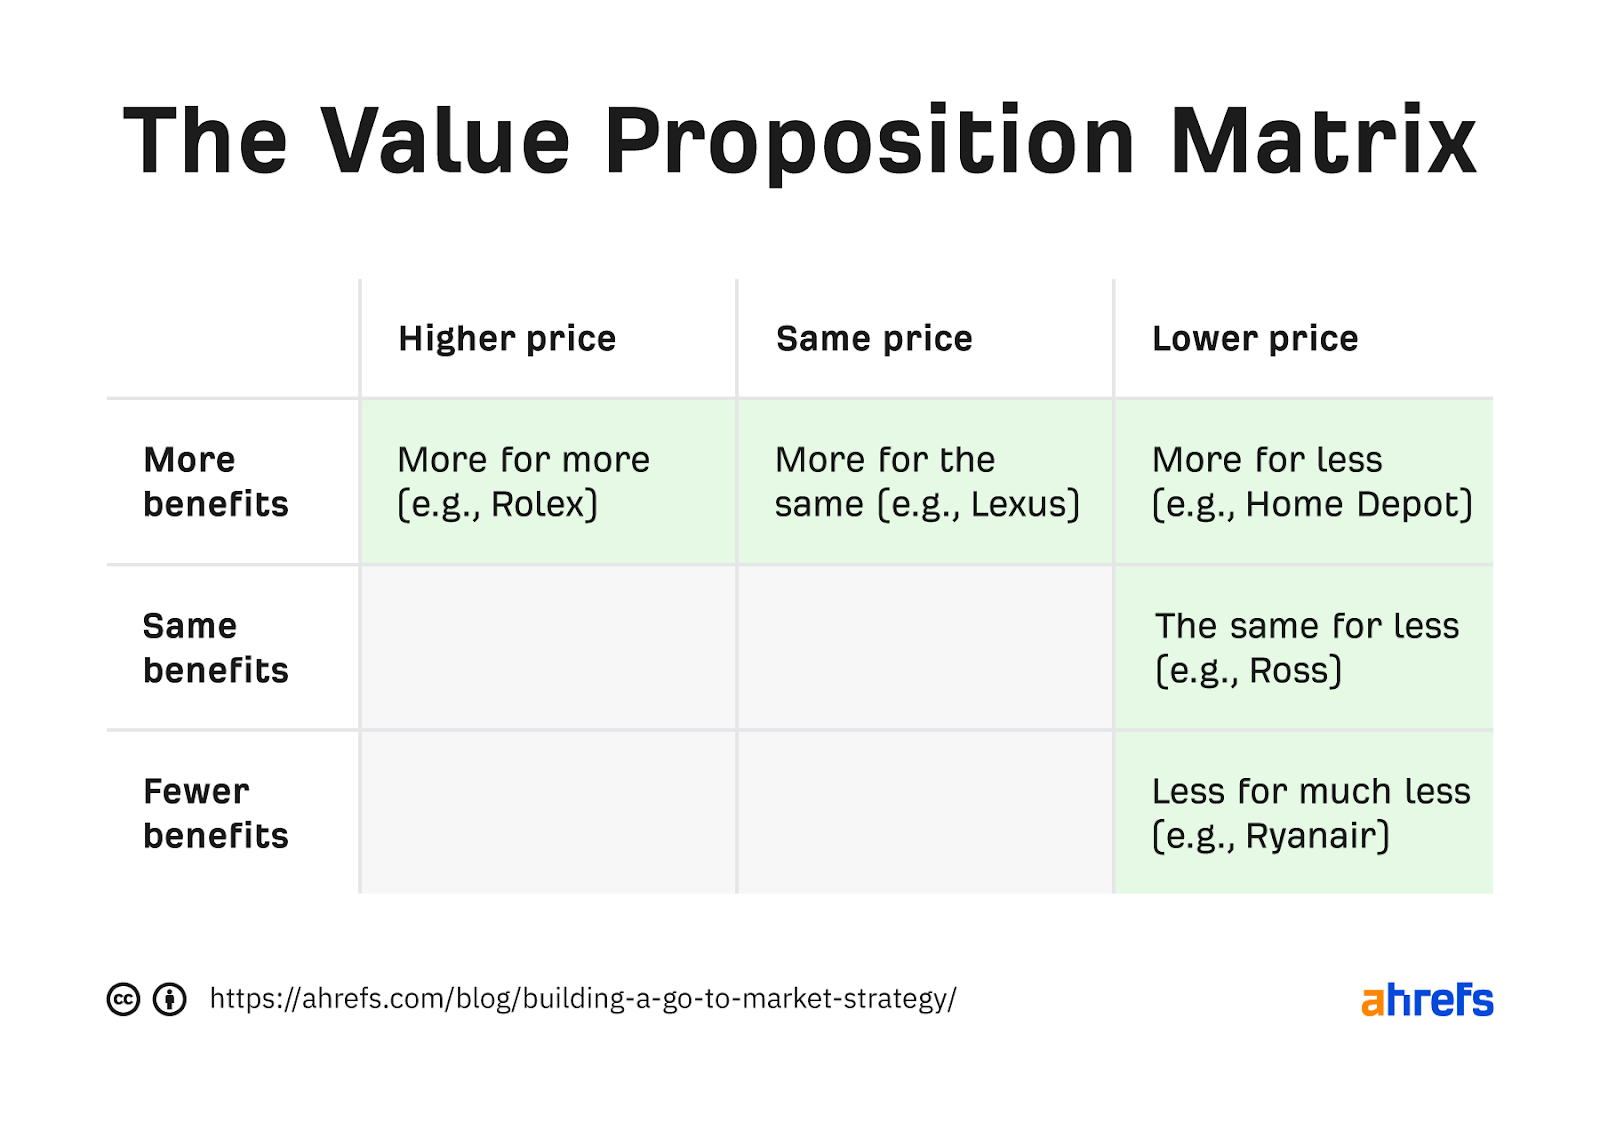 Value proposition matrix table. Three columns are 